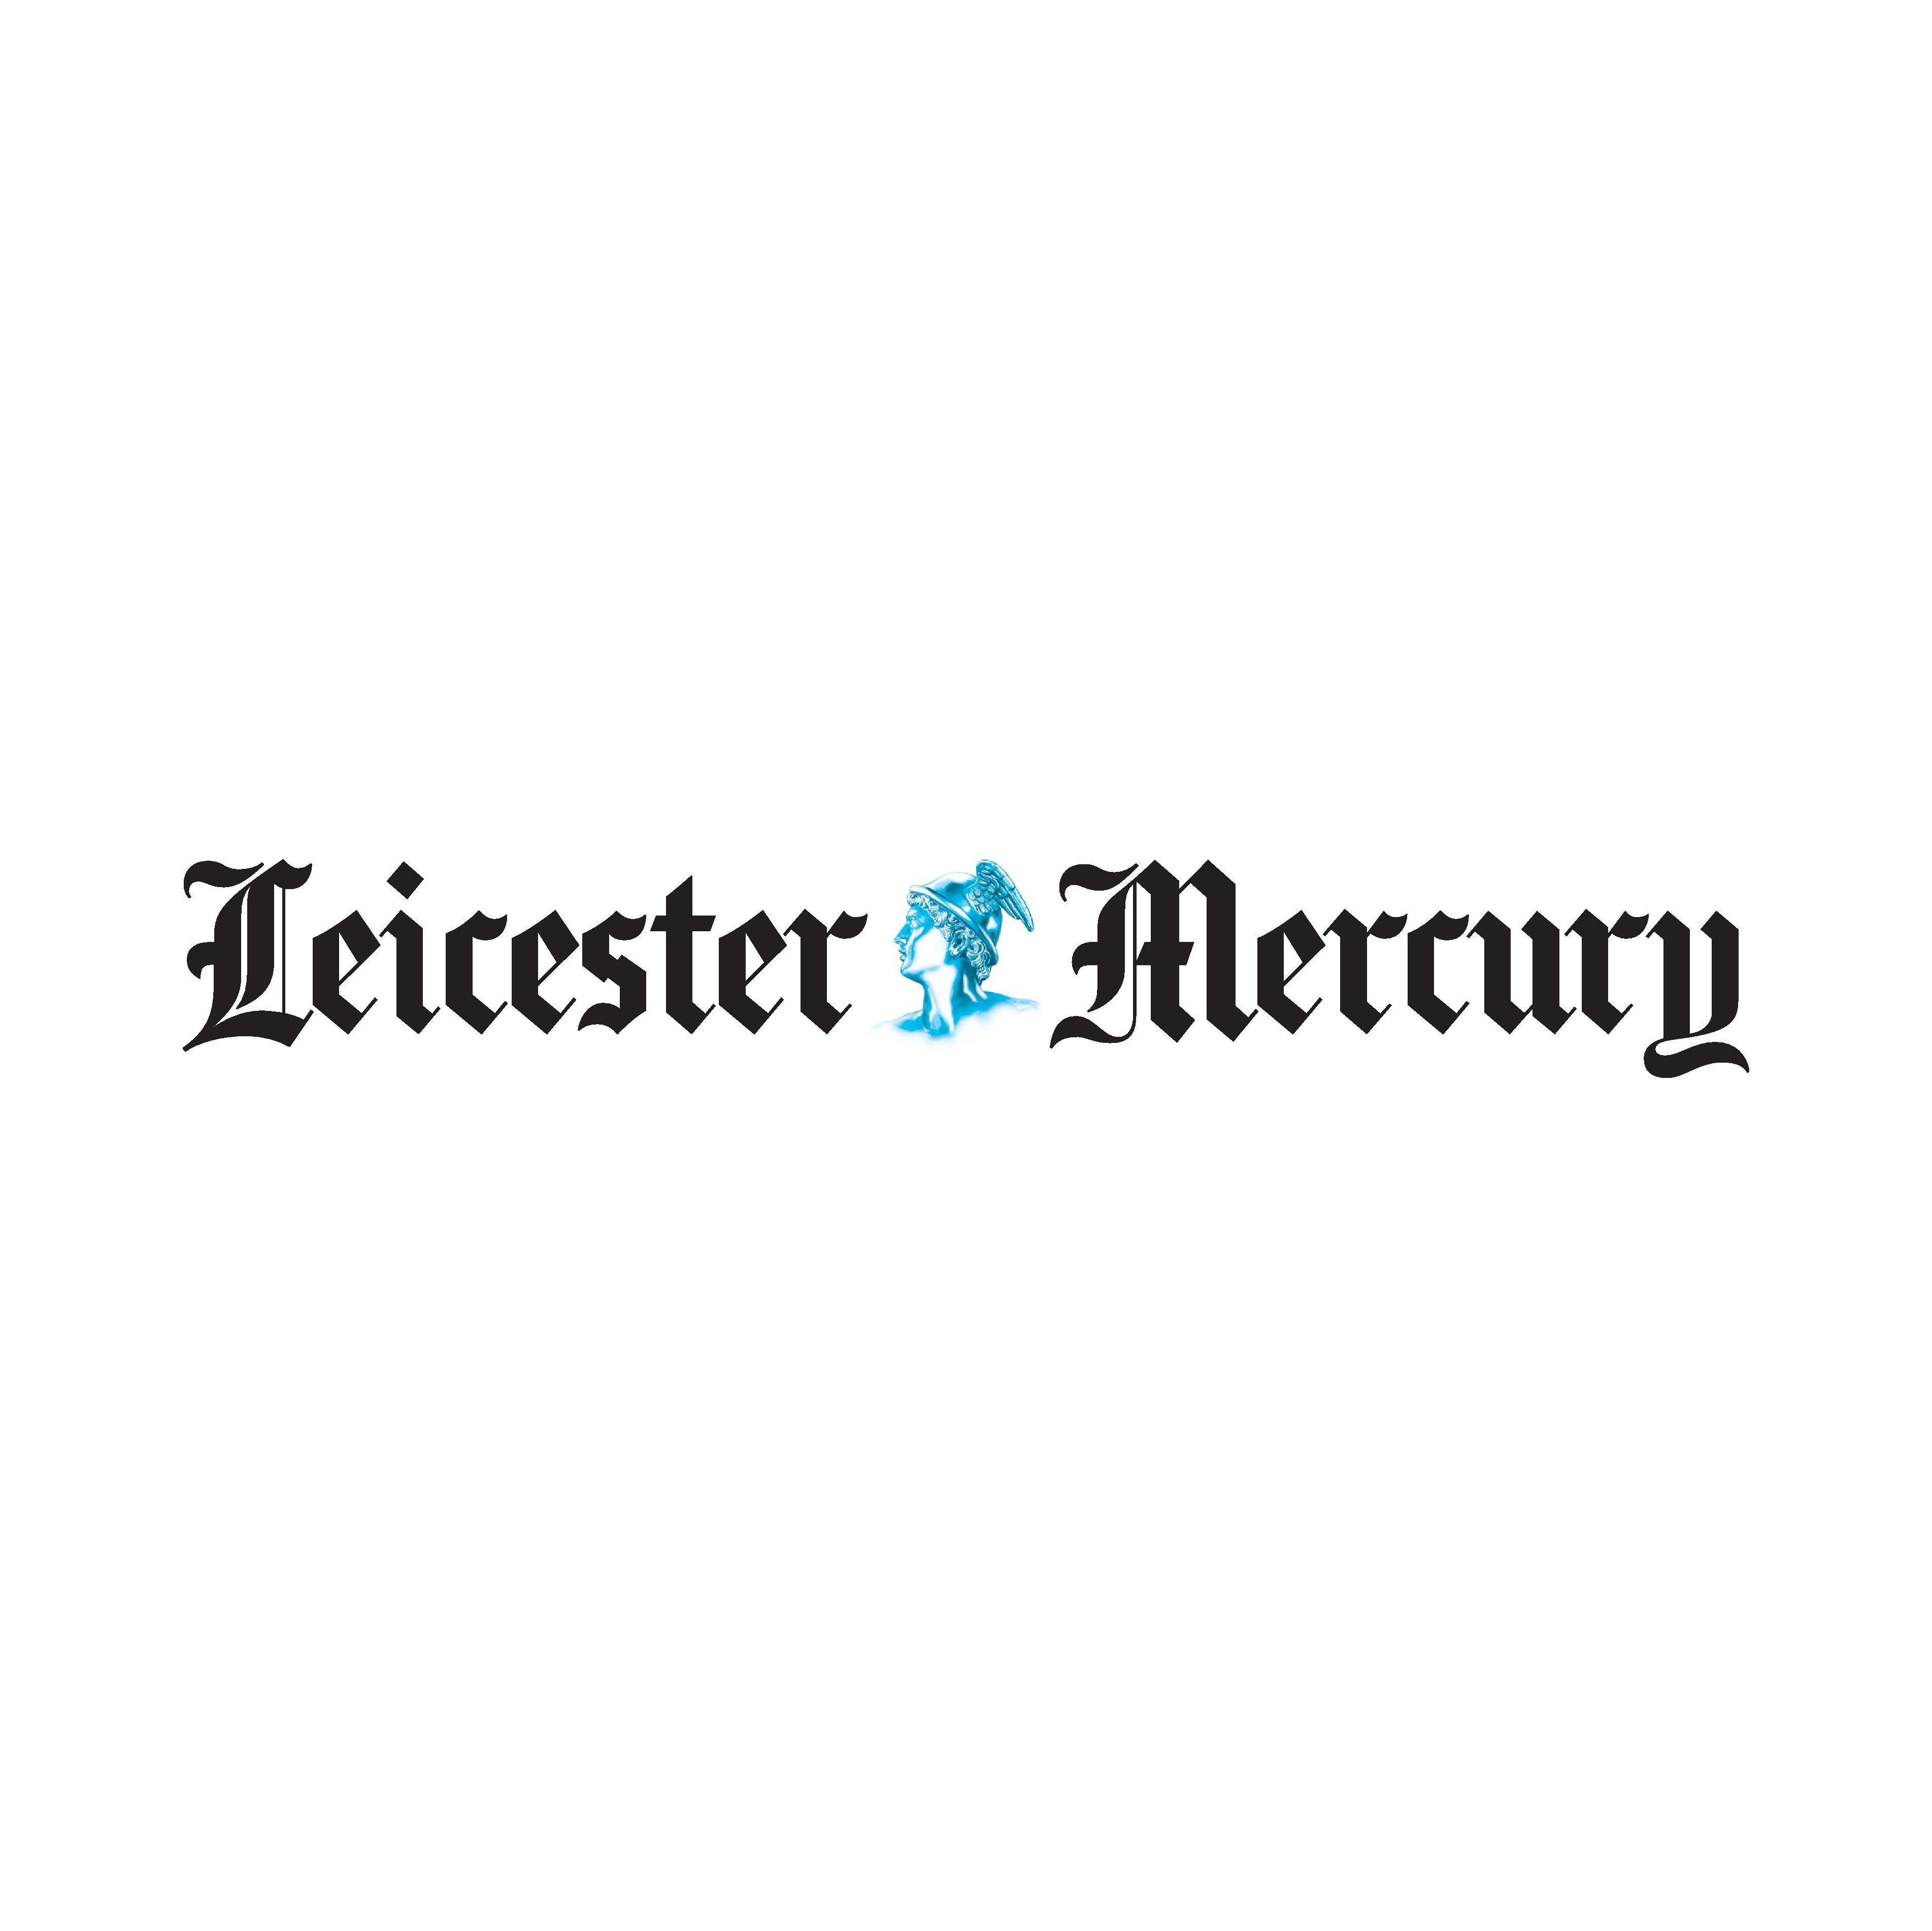 Leicester Mercury